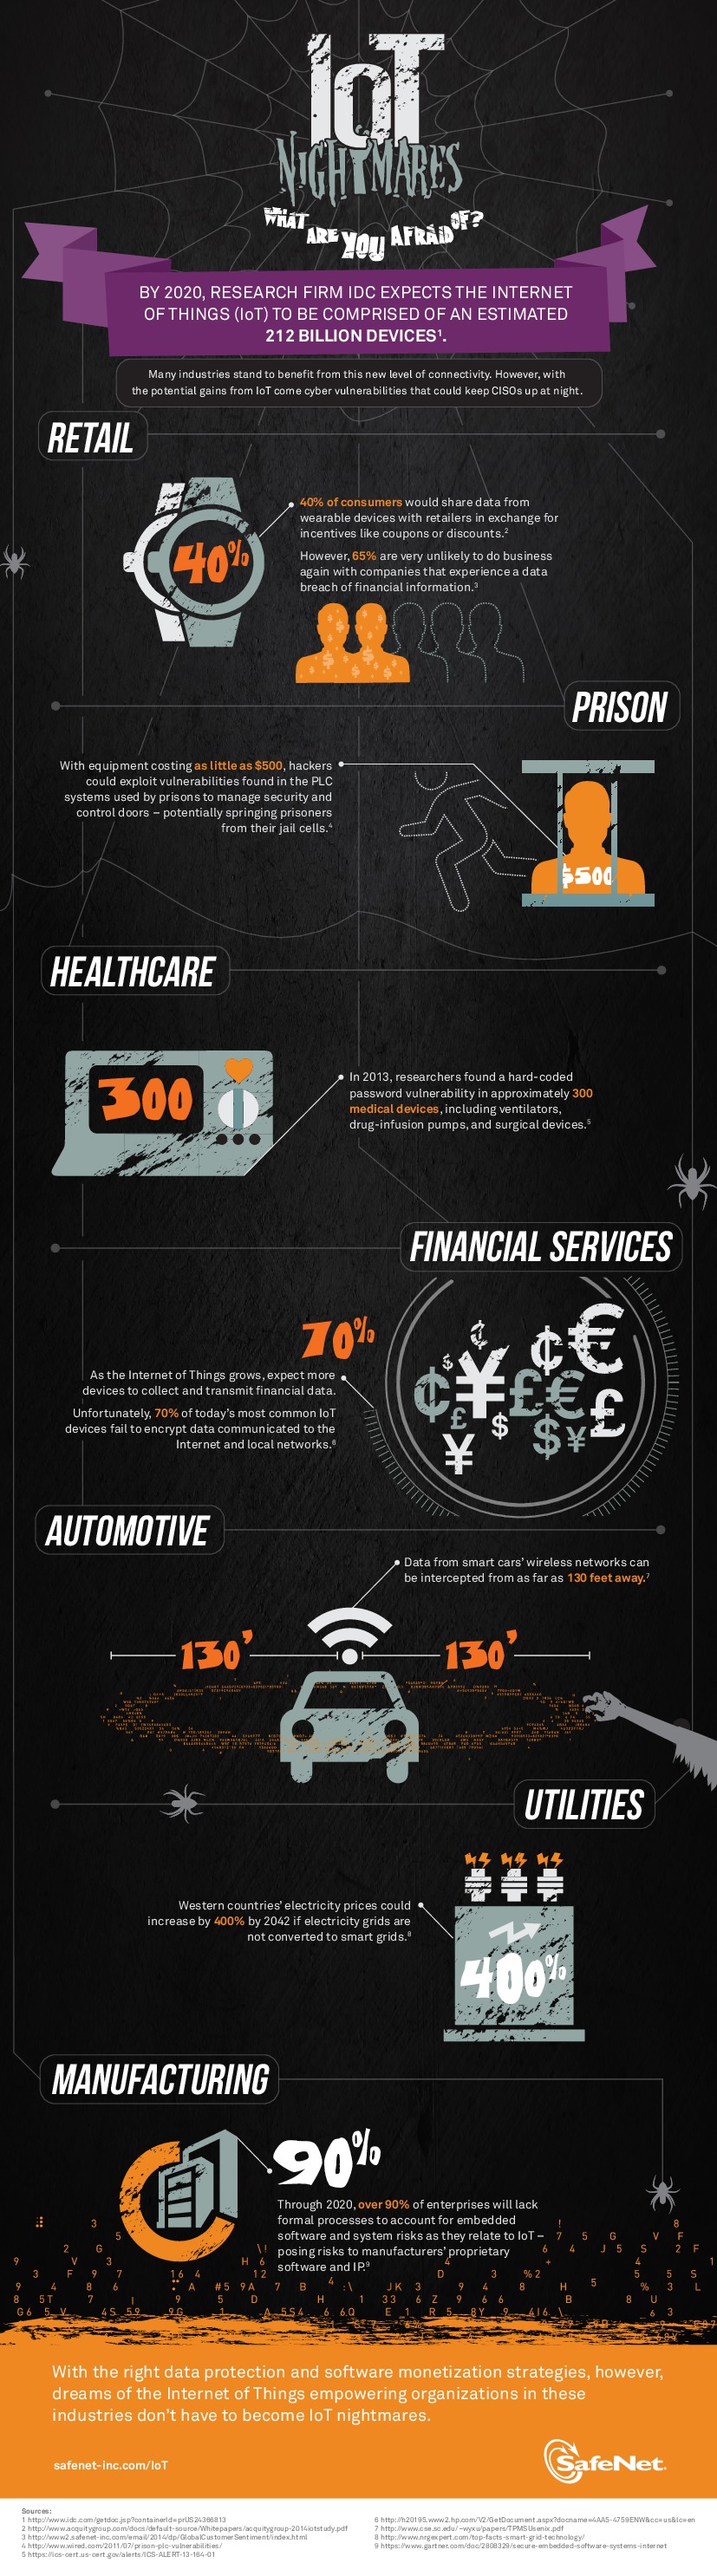 IoT Nightmares Infographic